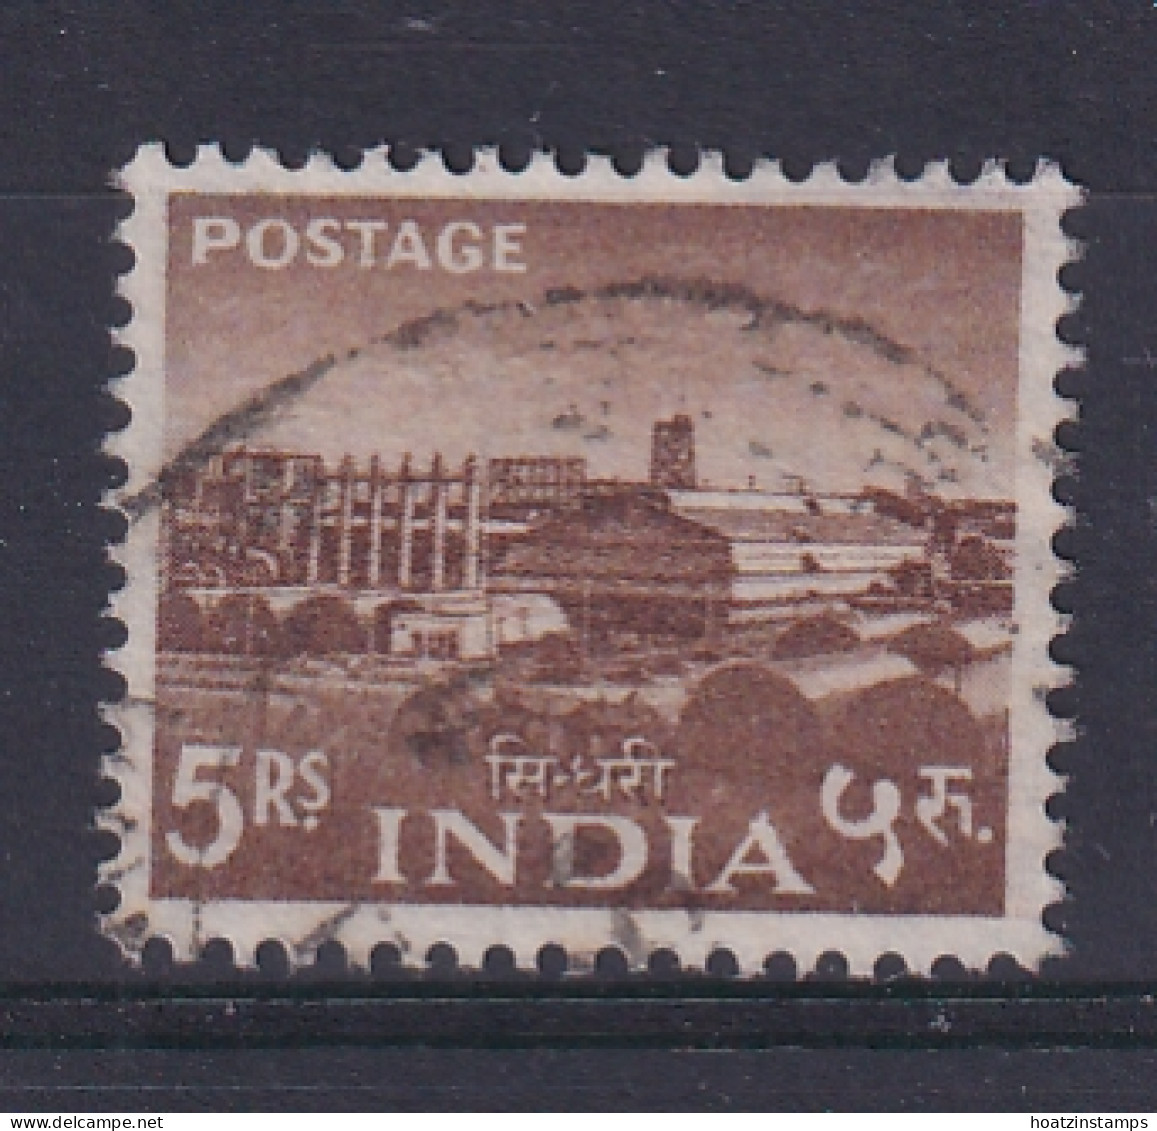 India: 1958/63   Pictorial    SG415     5R     Used - Gebruikt